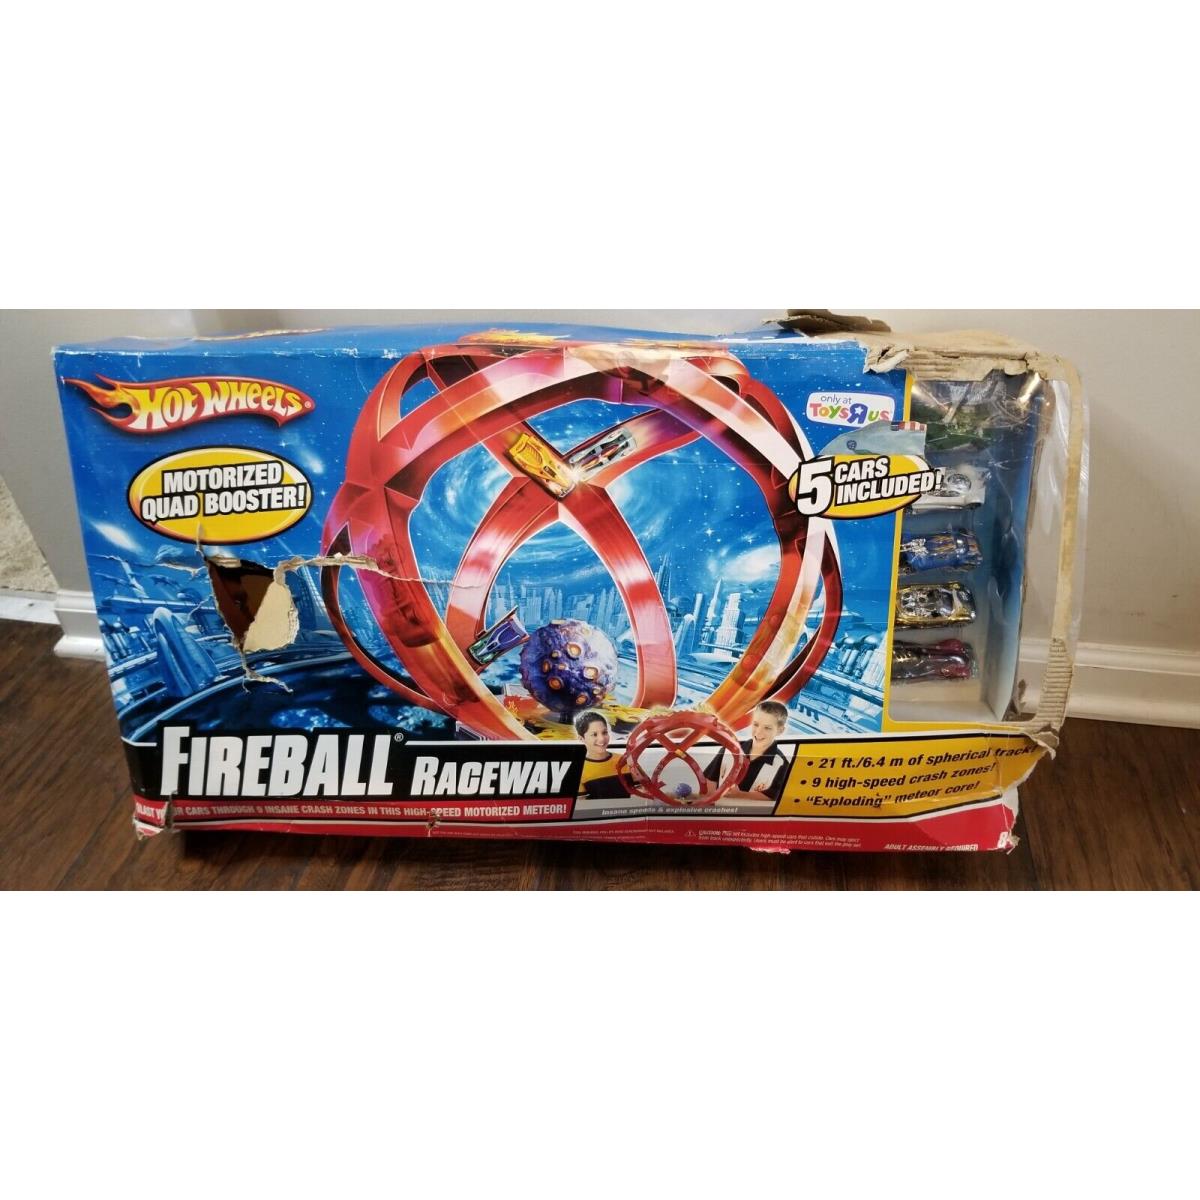 Hotwheels Fireball Raceway Playset 21` OF Spherical Track 5 Cars Included Read